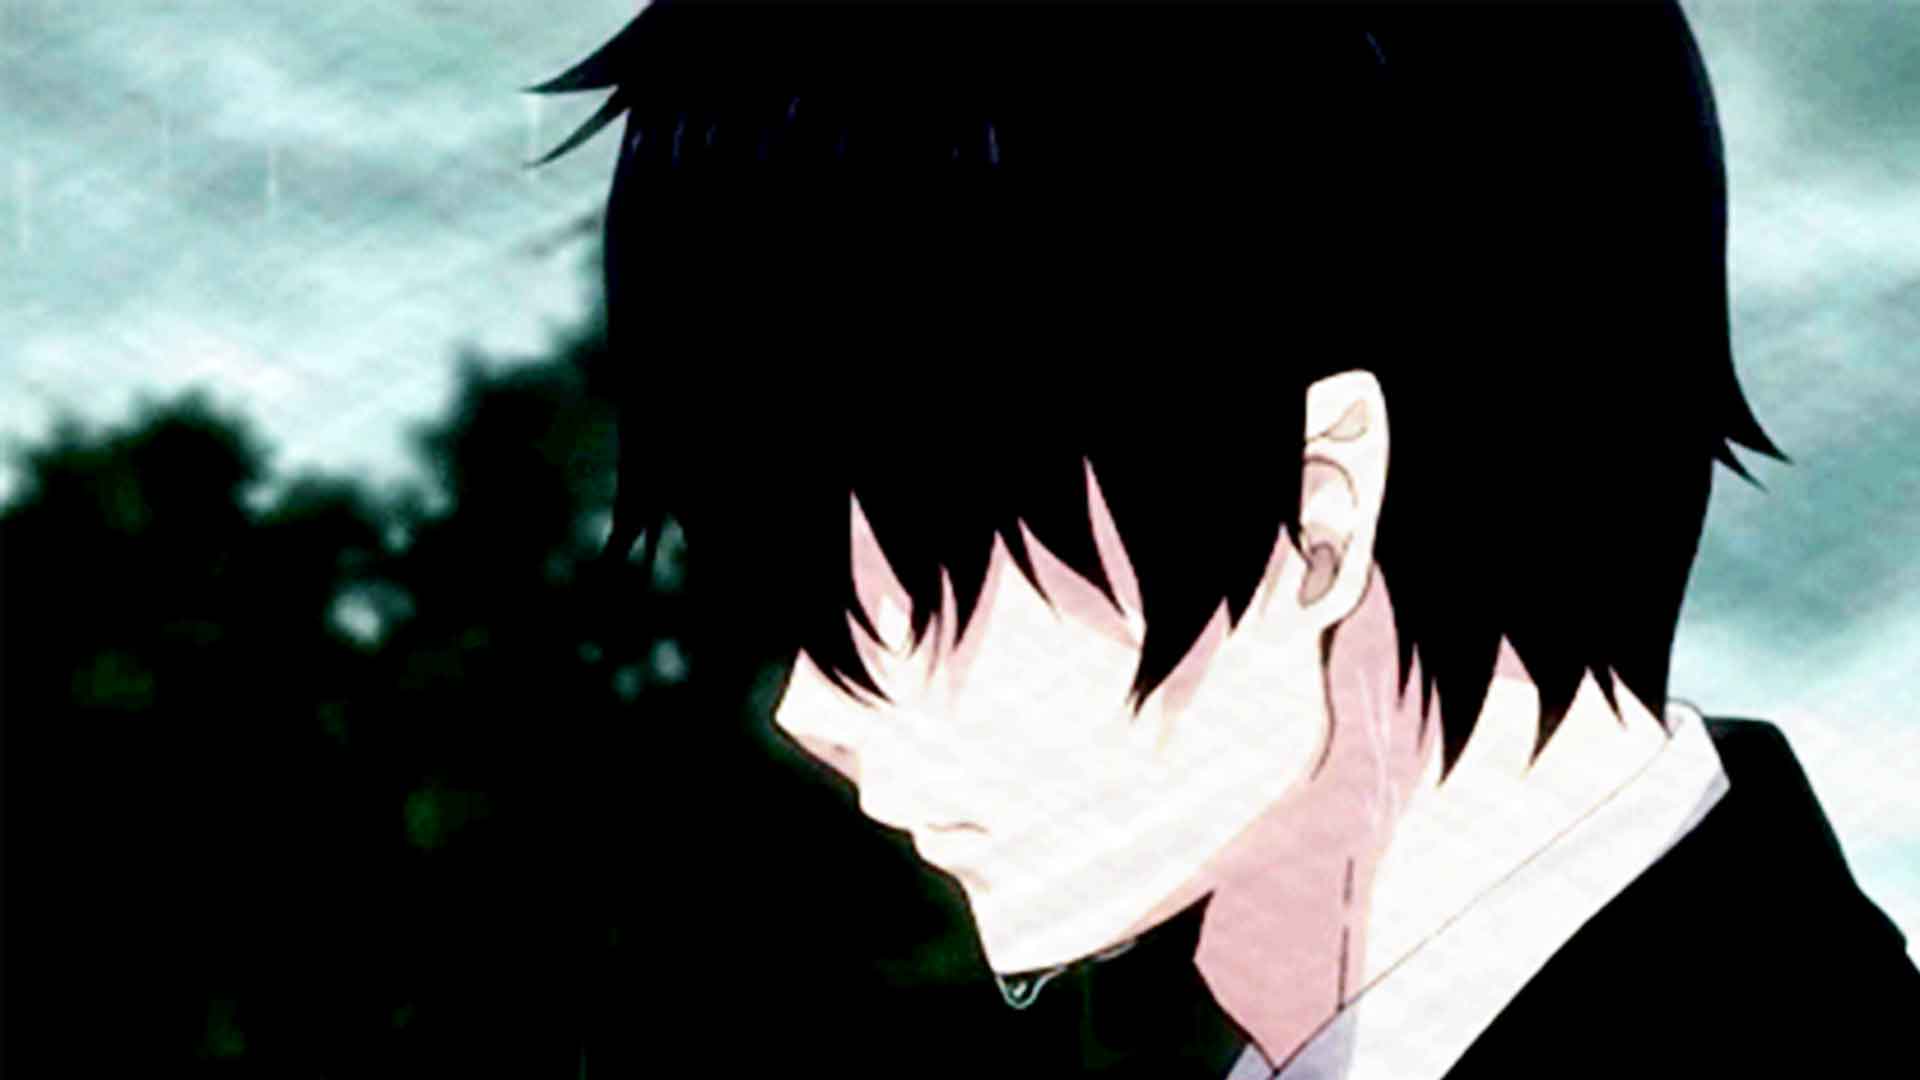 Sad Anime Boy Image Cartoon Alone Pic Sadever